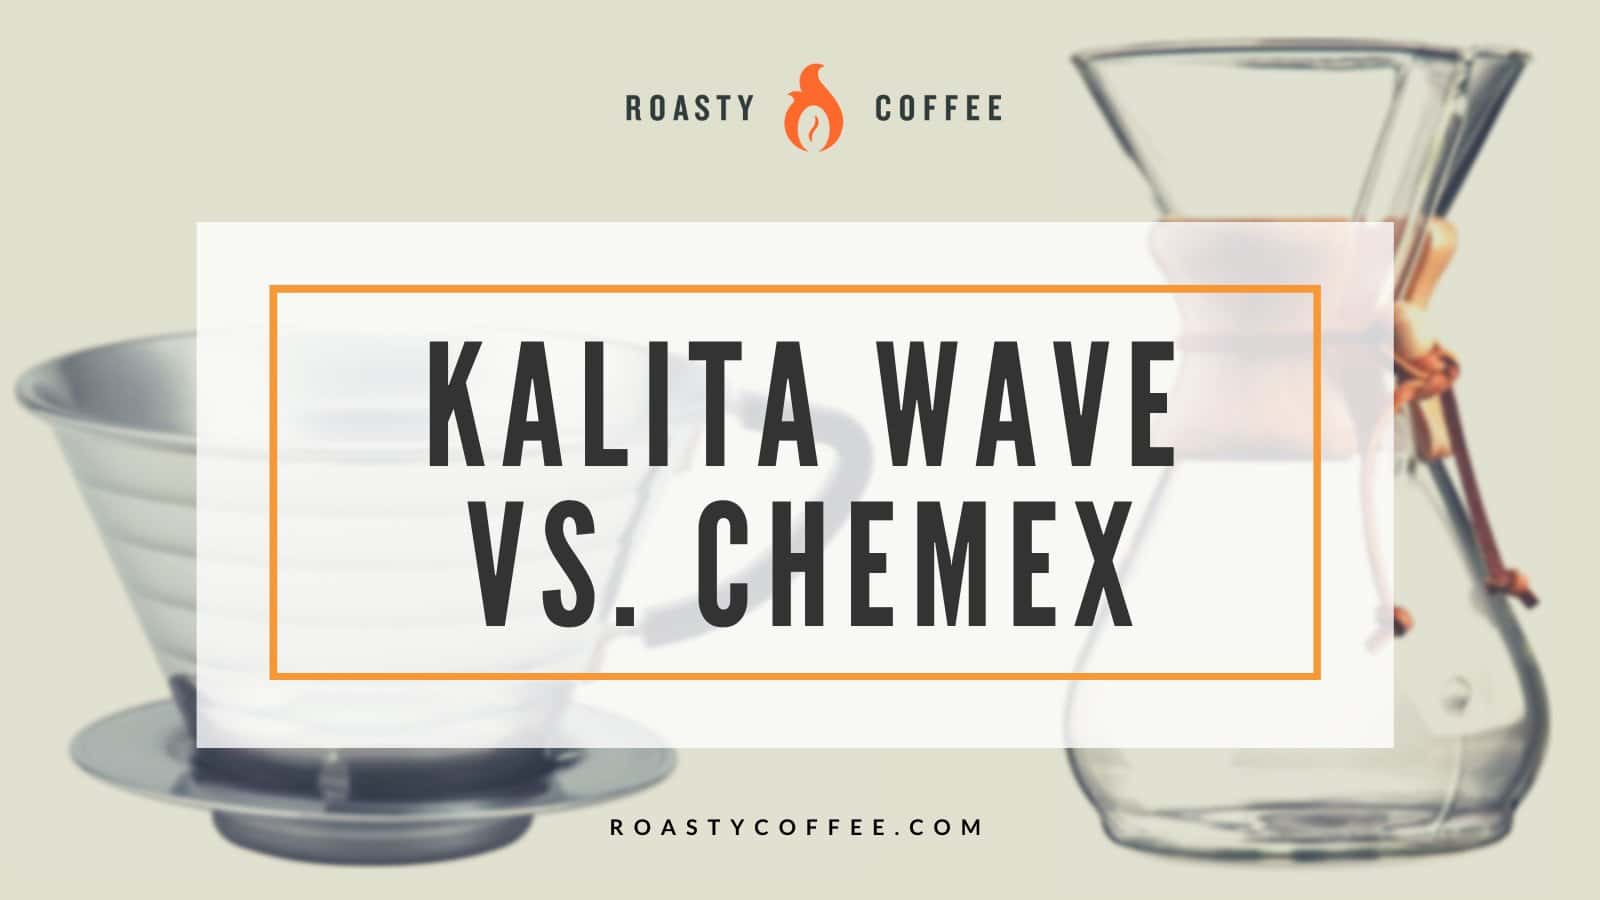 Kalita波对Chemex